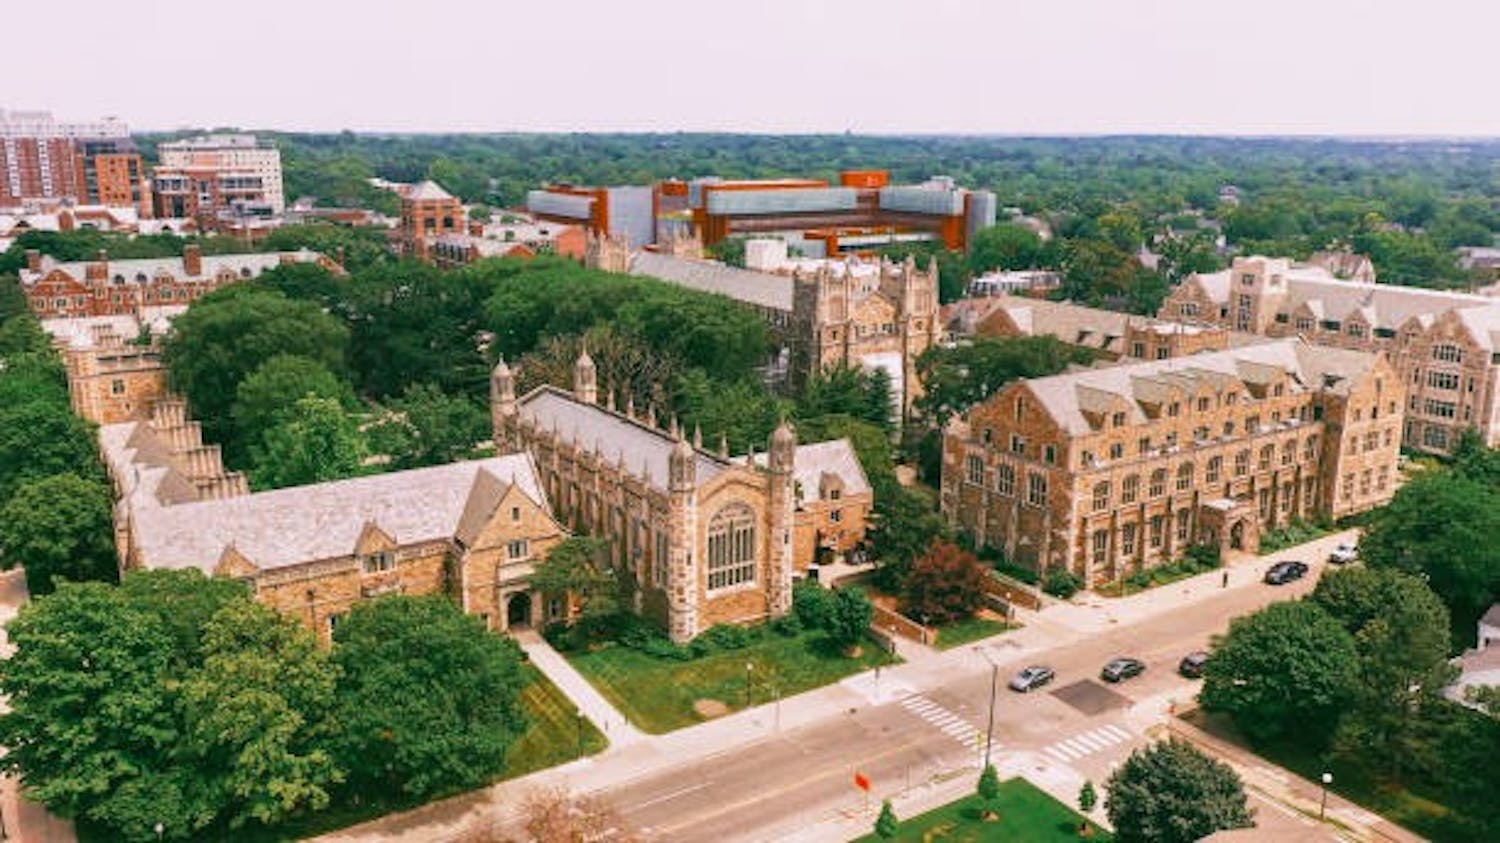 University of Michigan Law Quadrangle